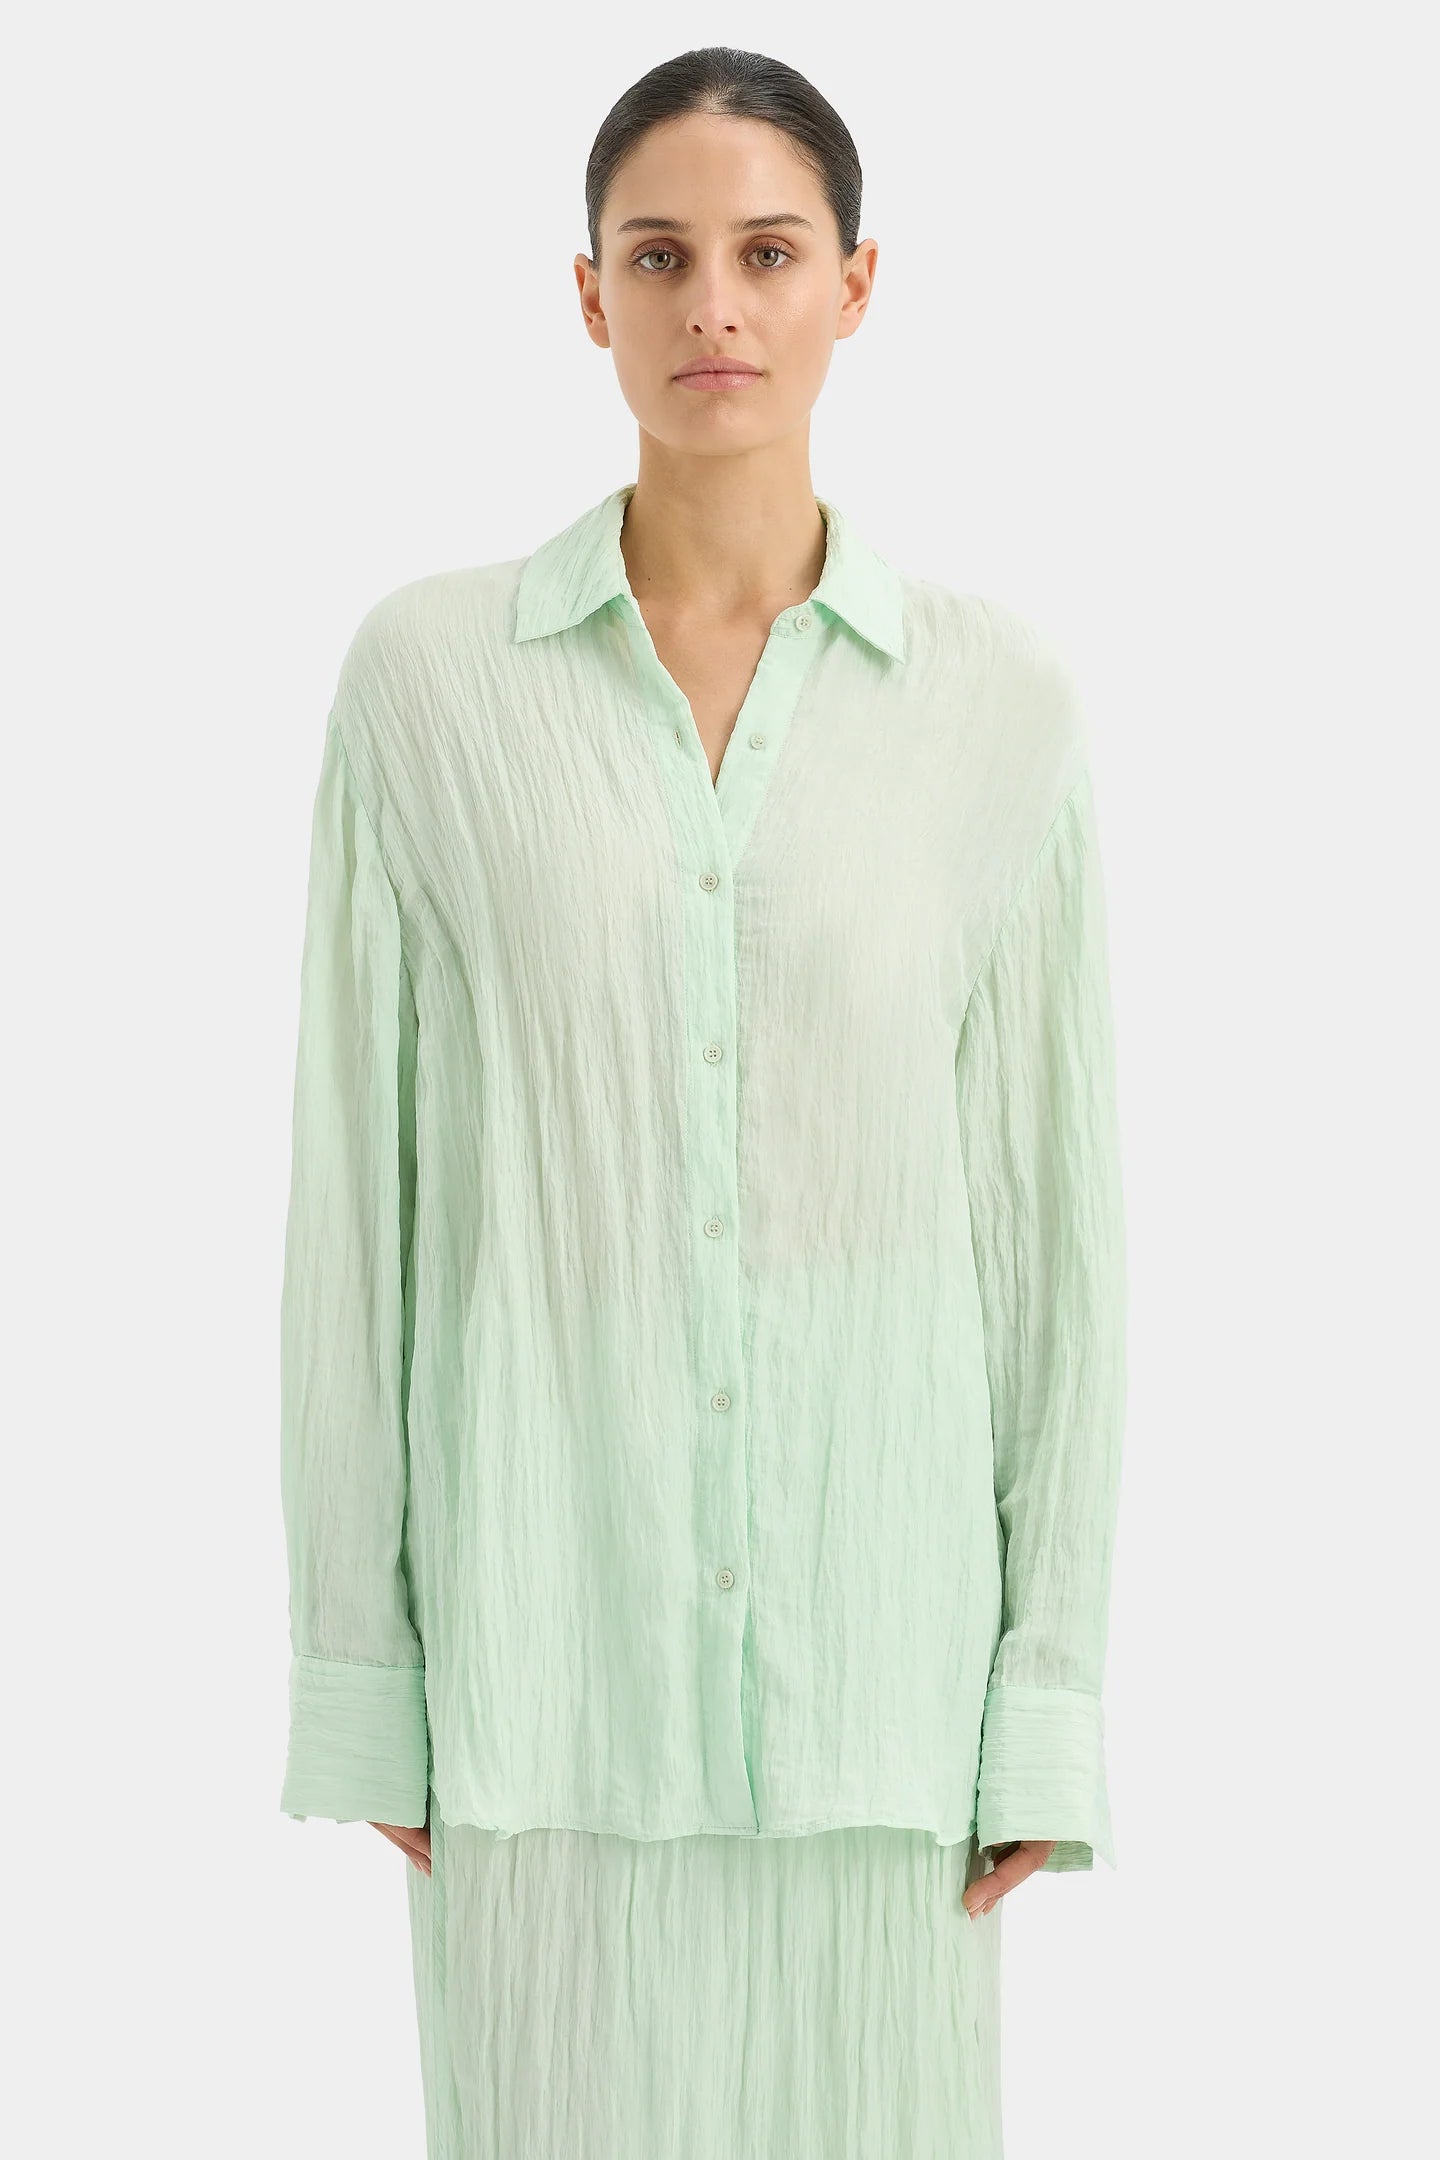 STL Ligera Long Sleeve Shirt in Mint